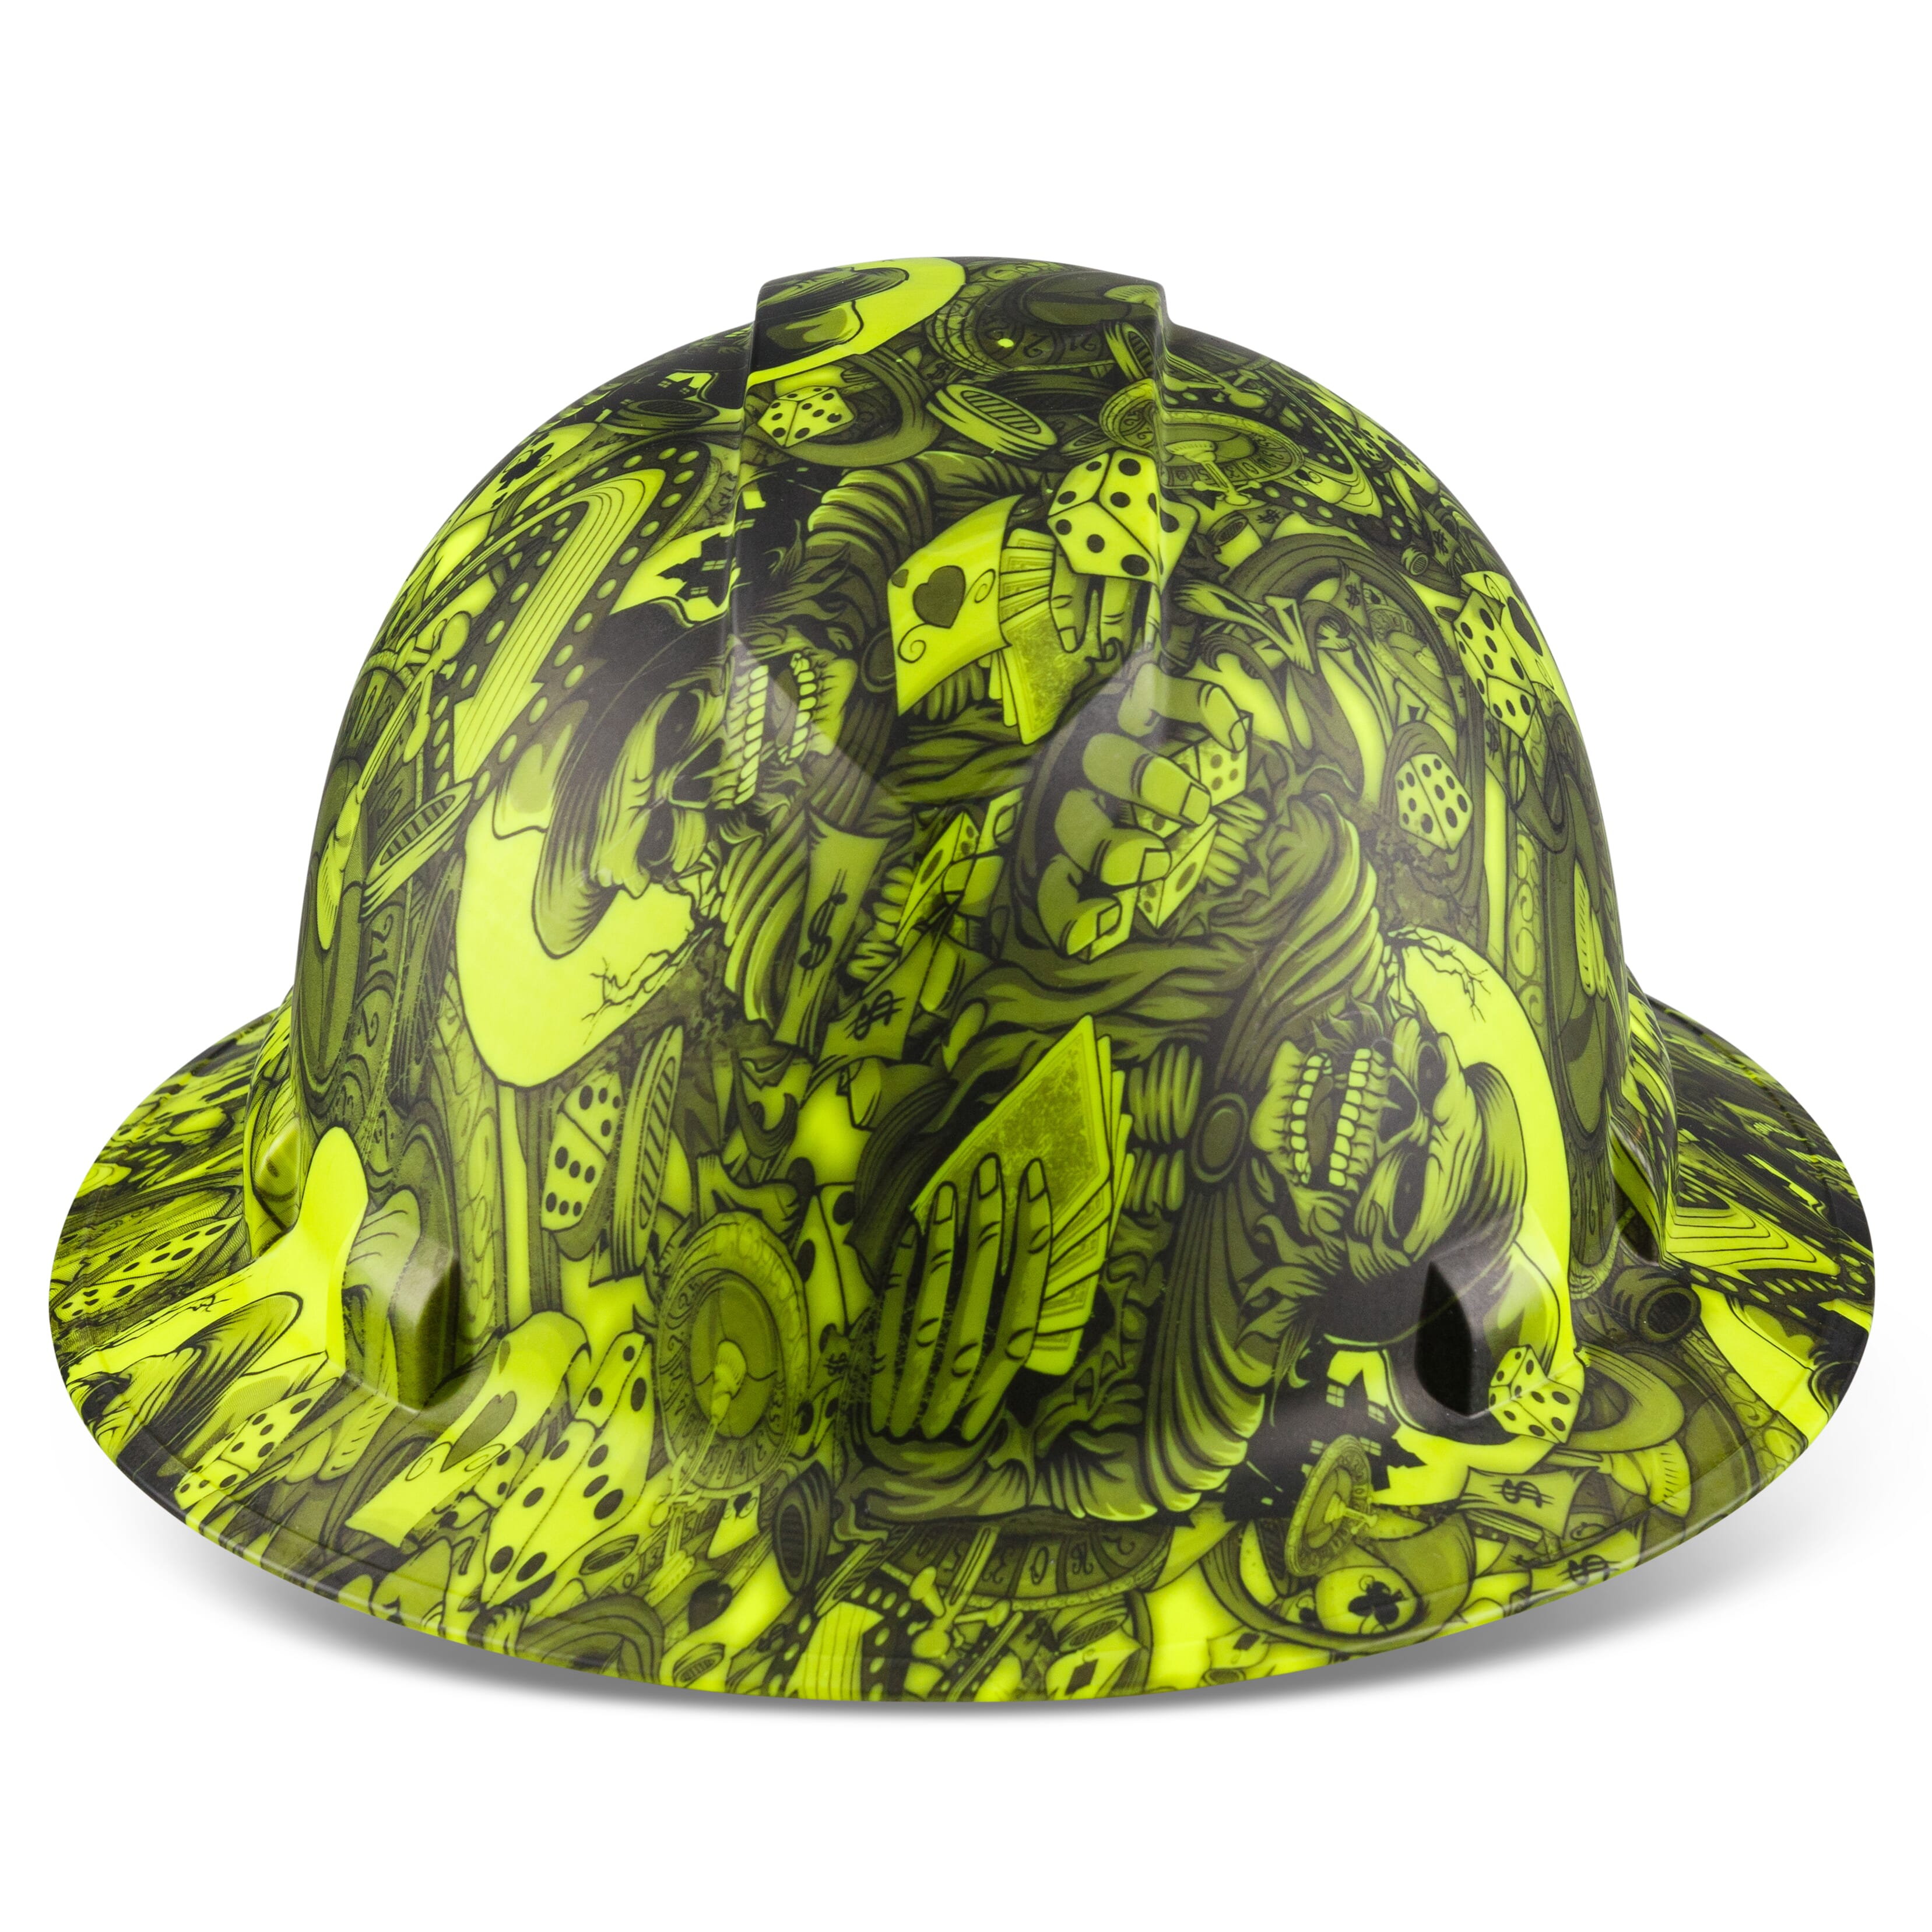 Full Brim Pyramex Hi Vis Lime Hard Hat, Custom Casino Fatale Design, Safety Helmet, 6 Point